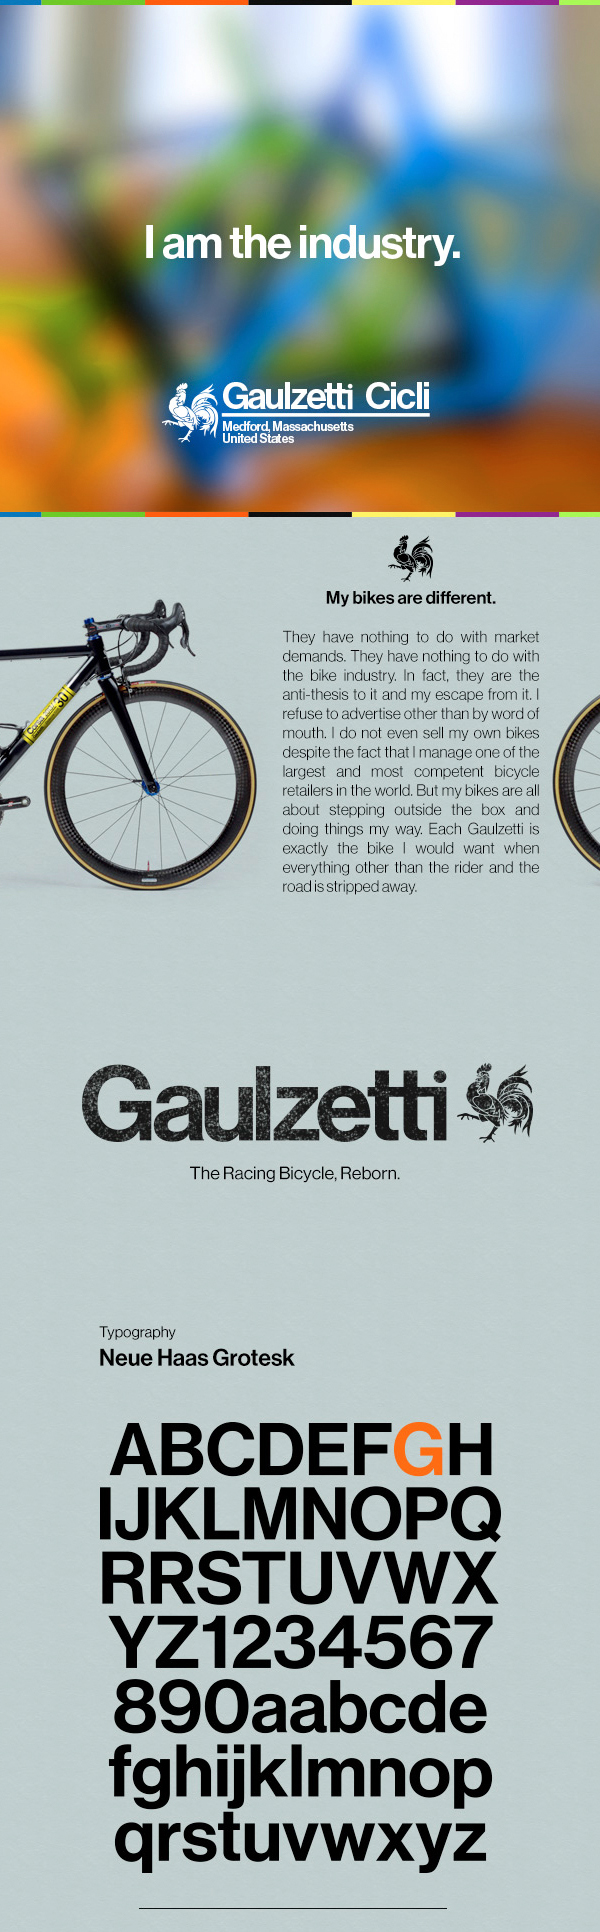 Bicycle Cycling gaulzetti Rooster bikes swiss grotesk industrial minimal neue haas grotesk visual identity marko vuleta djukanov